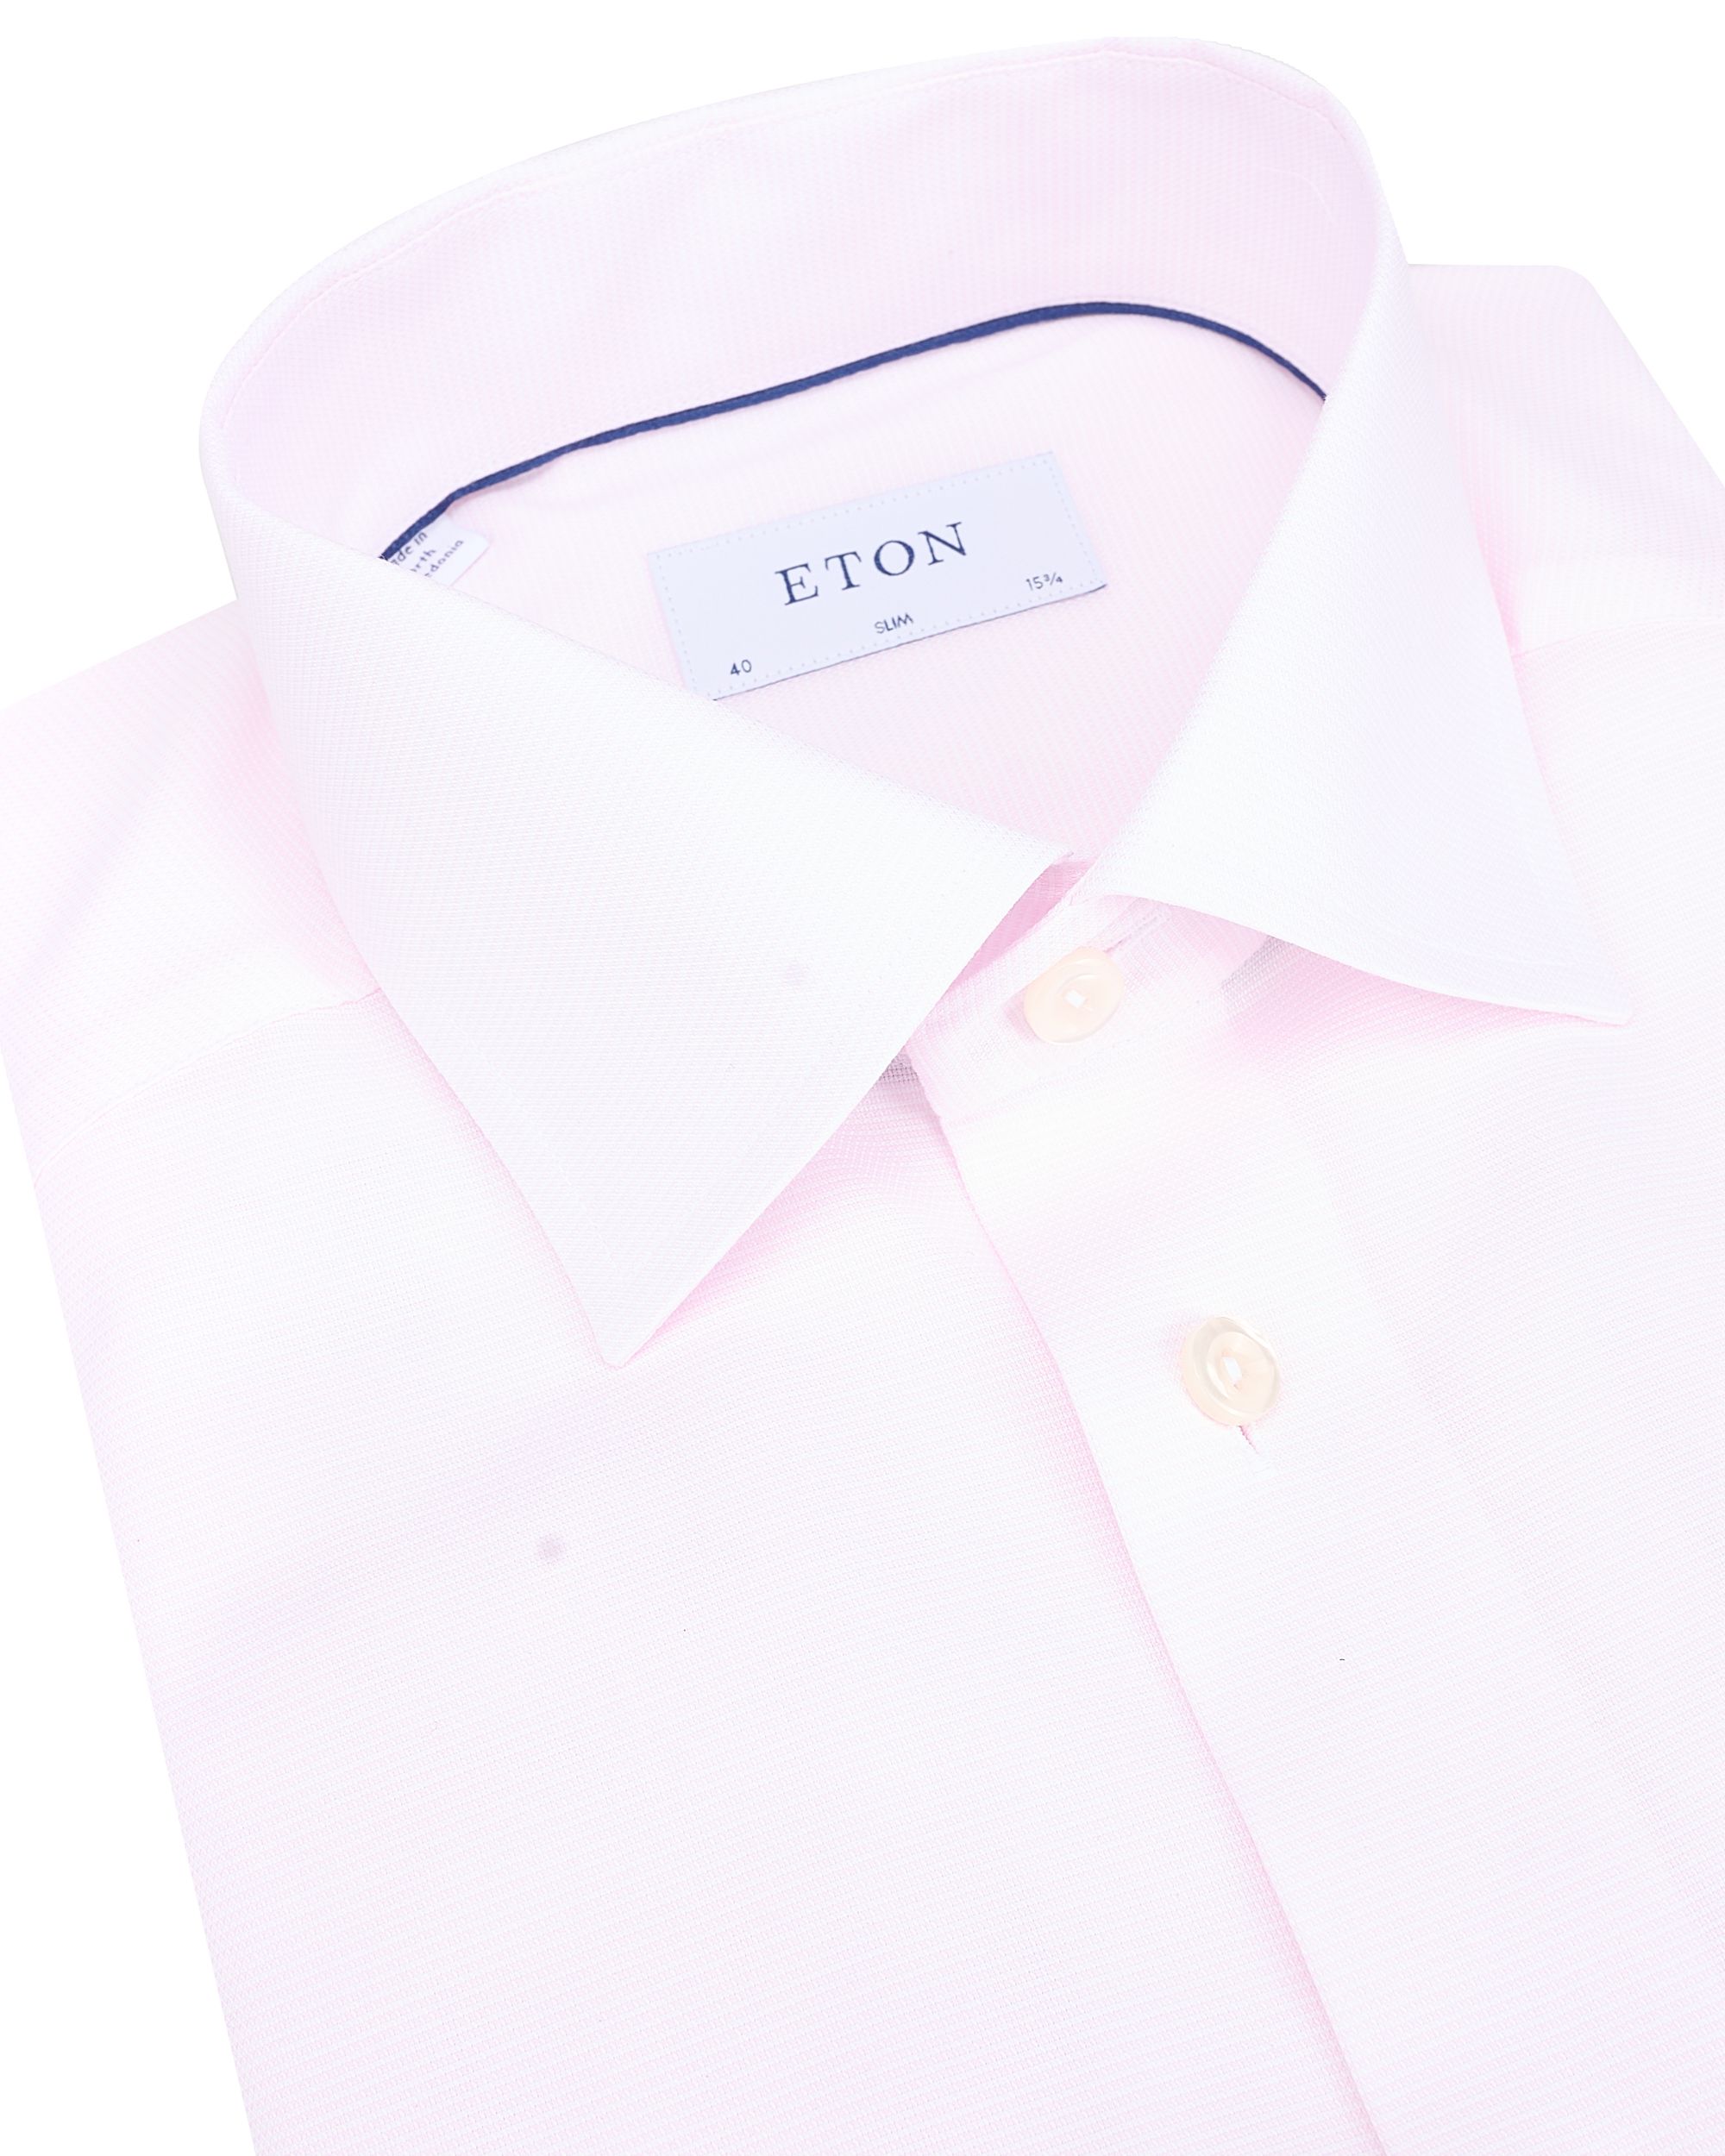 ETON Overhemd LM Roze 091979-001-43